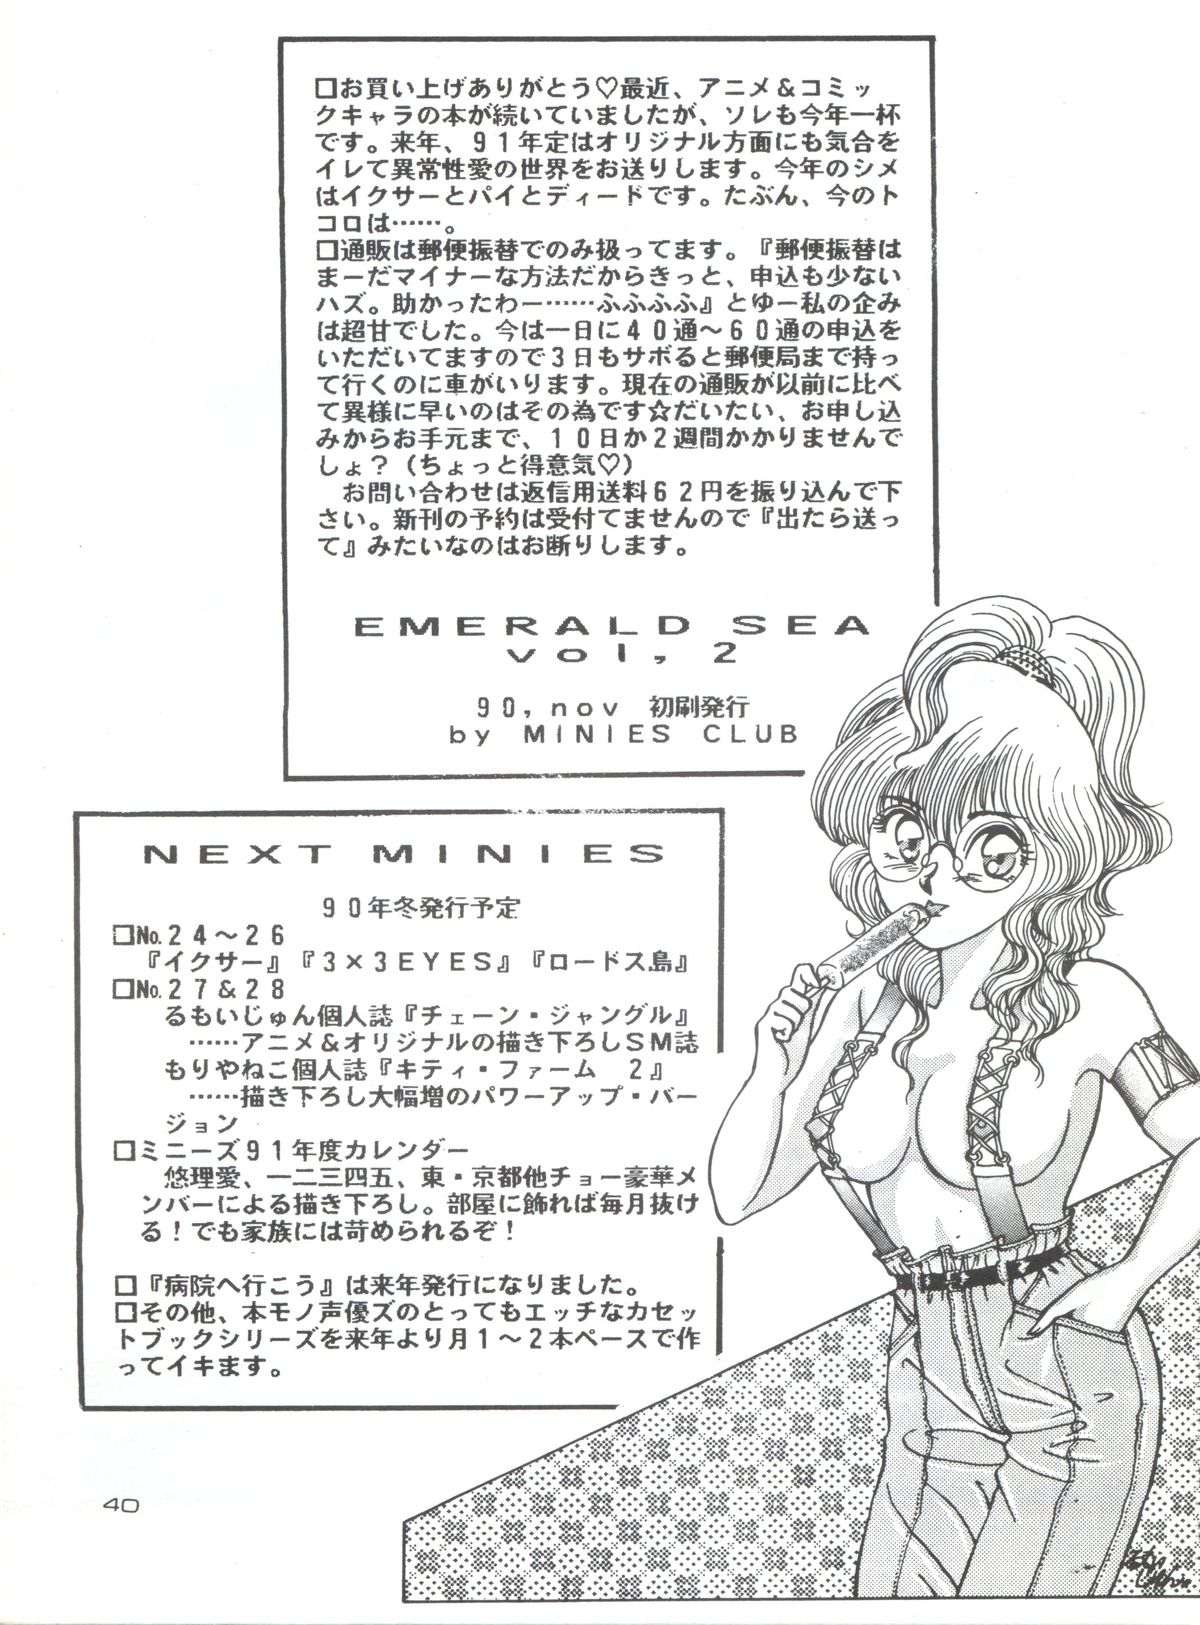 [MINIES CLUB (こうたろう)] Nadia girls in Emerald sea vol. 2 - Minies club 23 (ふしぎの海のナディア)